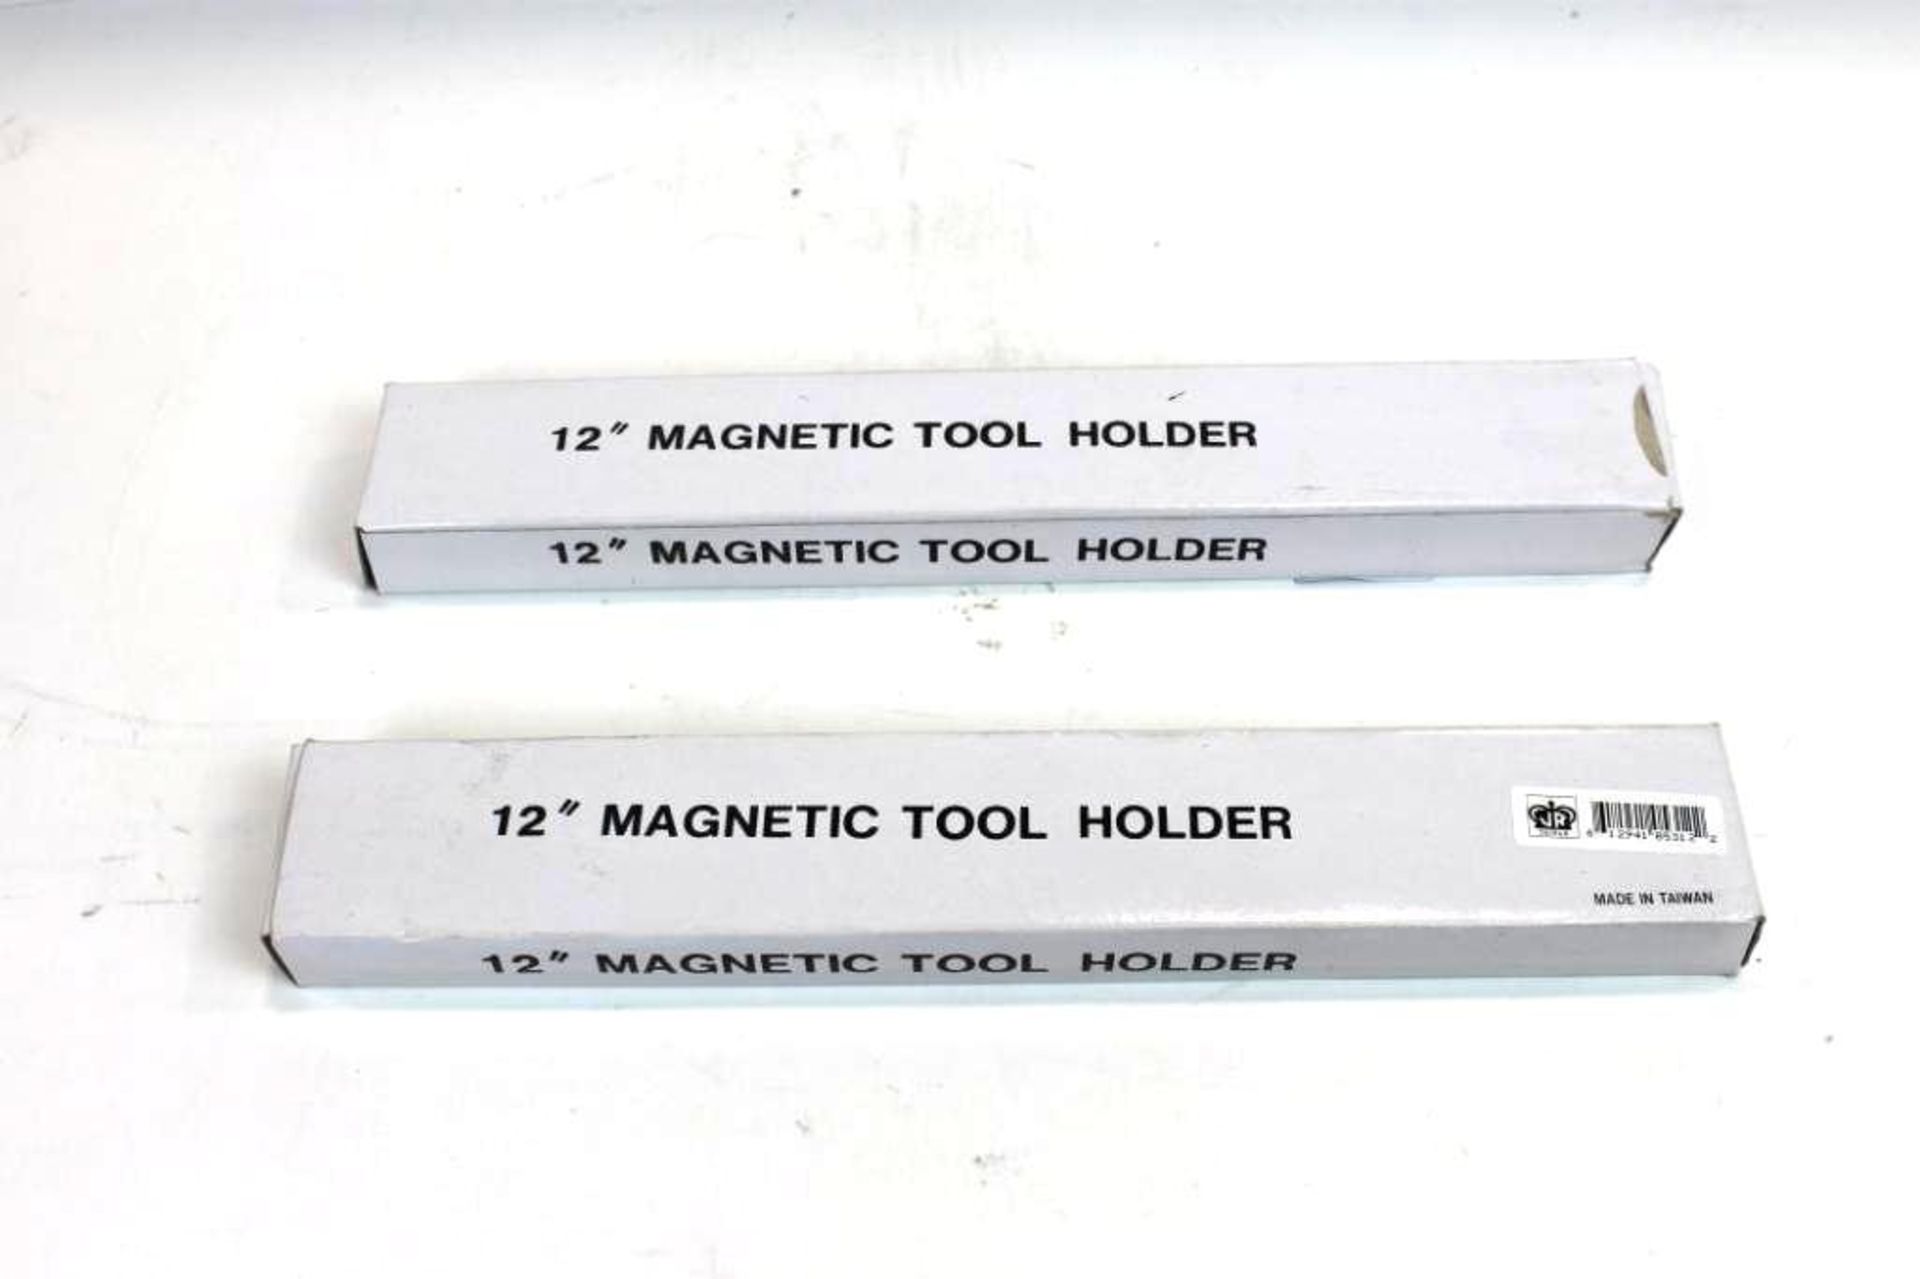 LOT OF 2 MAGNETIC TOOL HOLDER - JOHNSON ROSE 5312 - NEW - Image 2 of 2